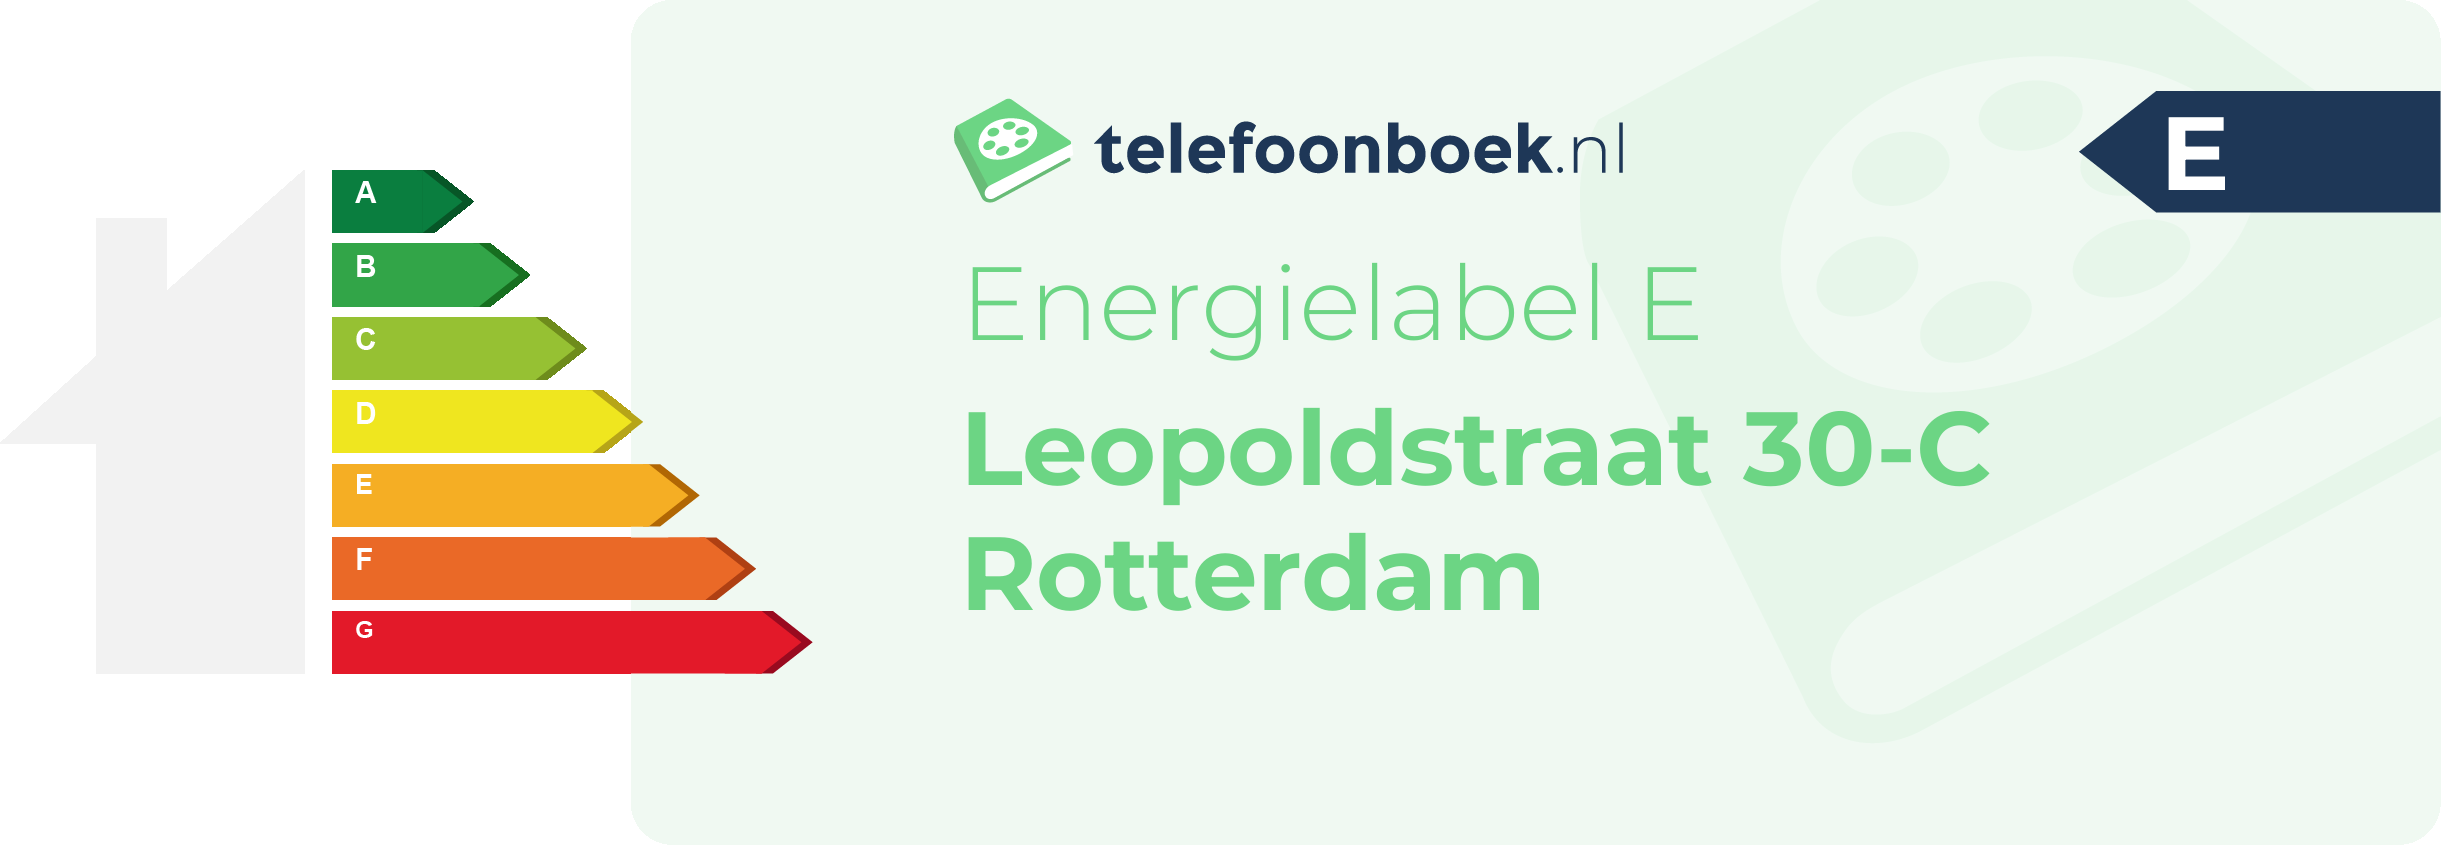 Energielabel Leopoldstraat 30-C Rotterdam